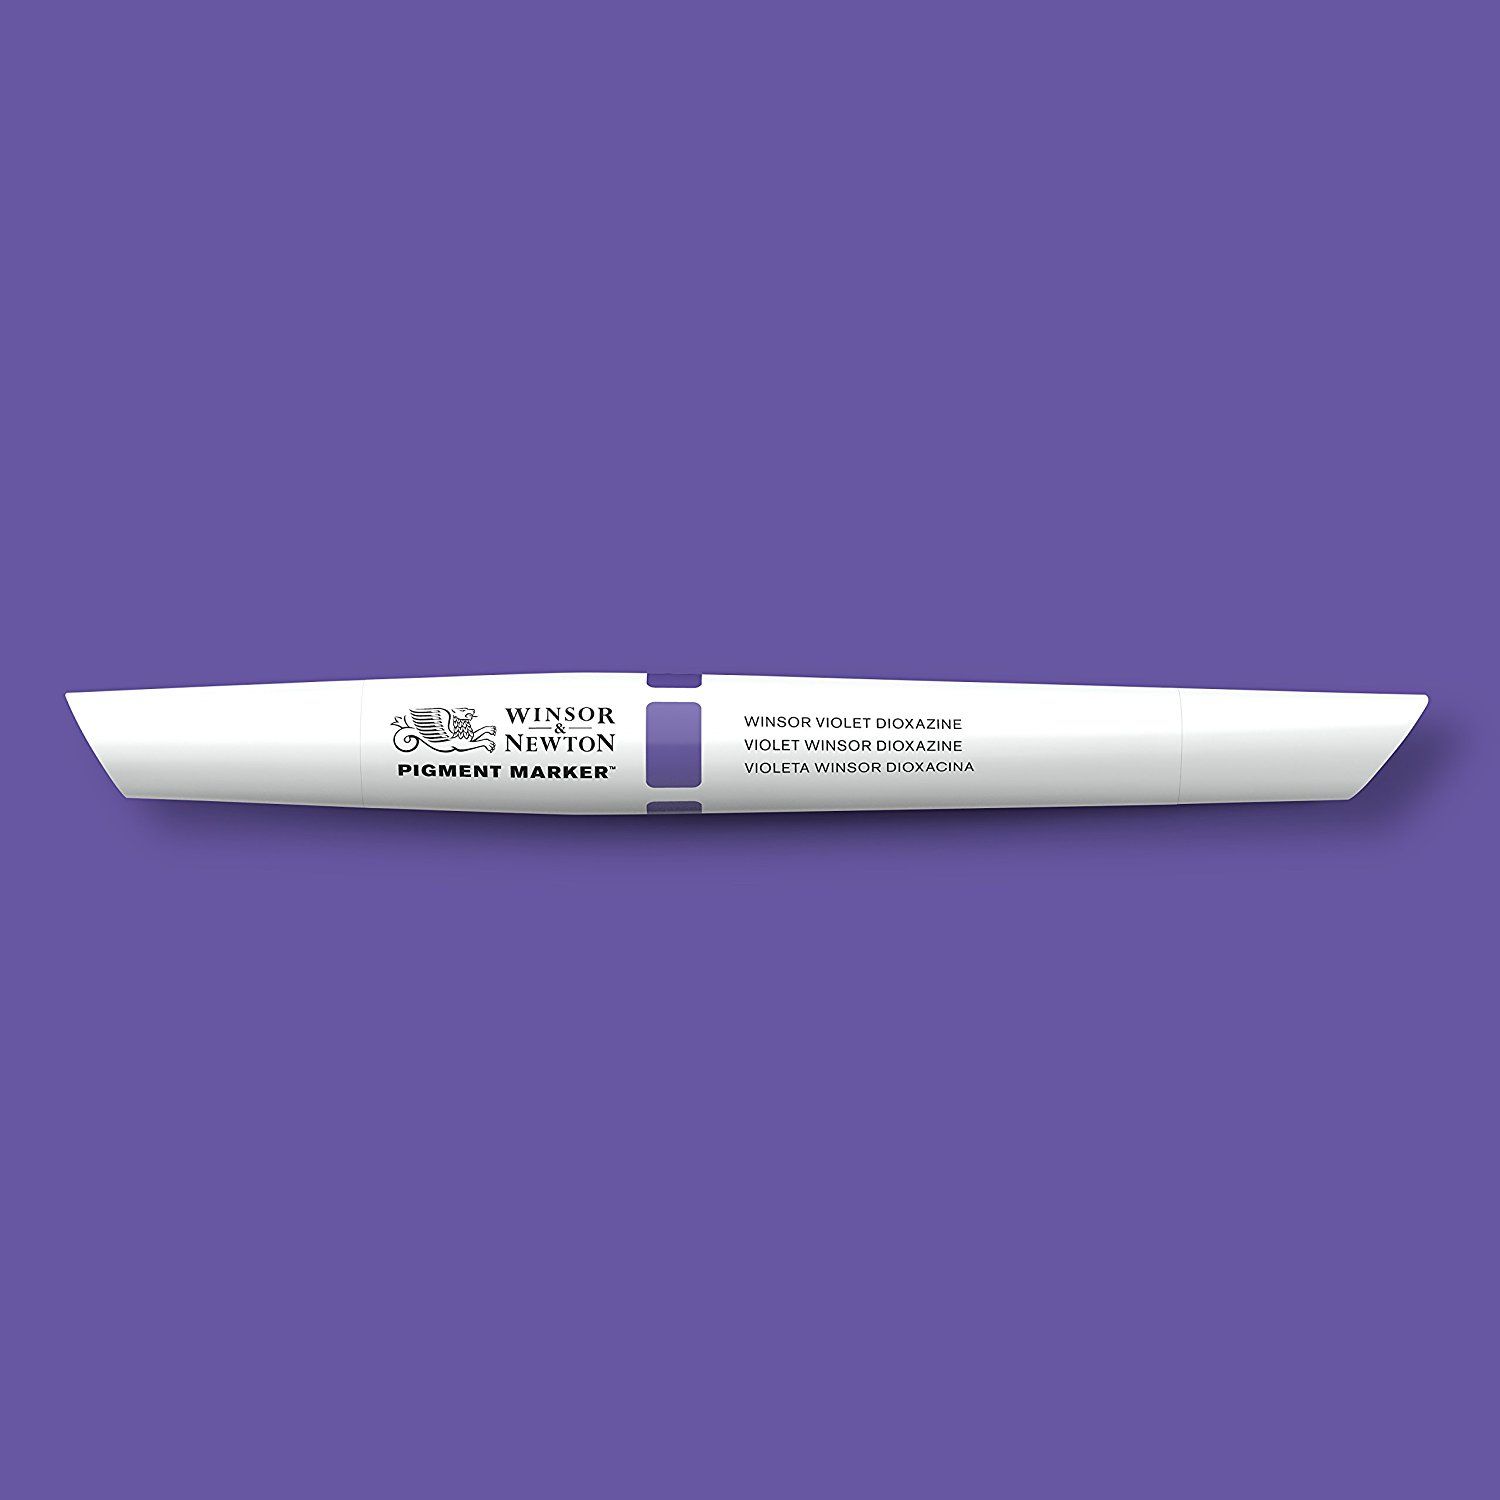 Winsor & Newton Pigment Marker - Winsor Violet Dioxine